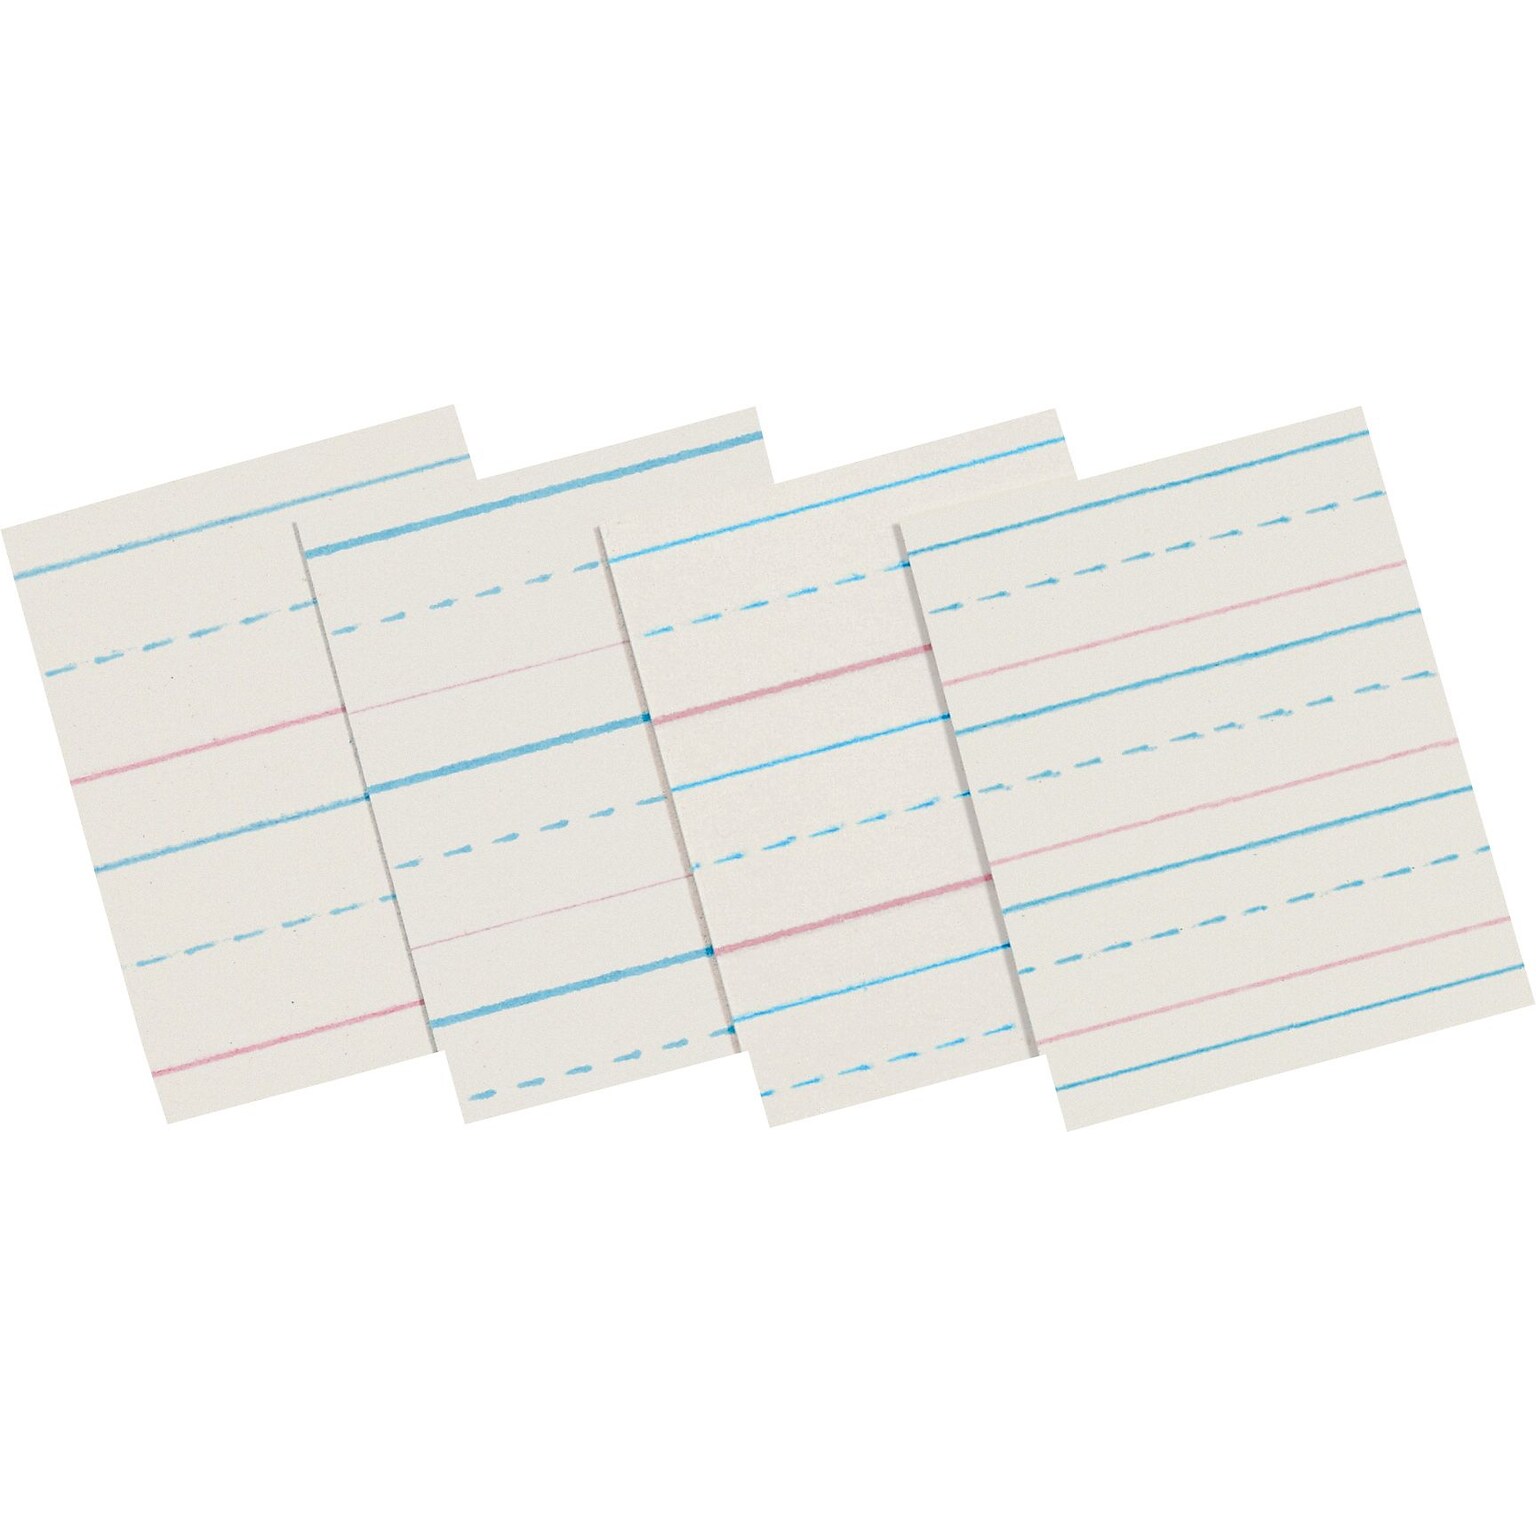 Pacon Zaner-Bloser 10-1/2 x 8, 1/2 Ruled Broken Midline Newsprint, White, 500 Sheets/Pk